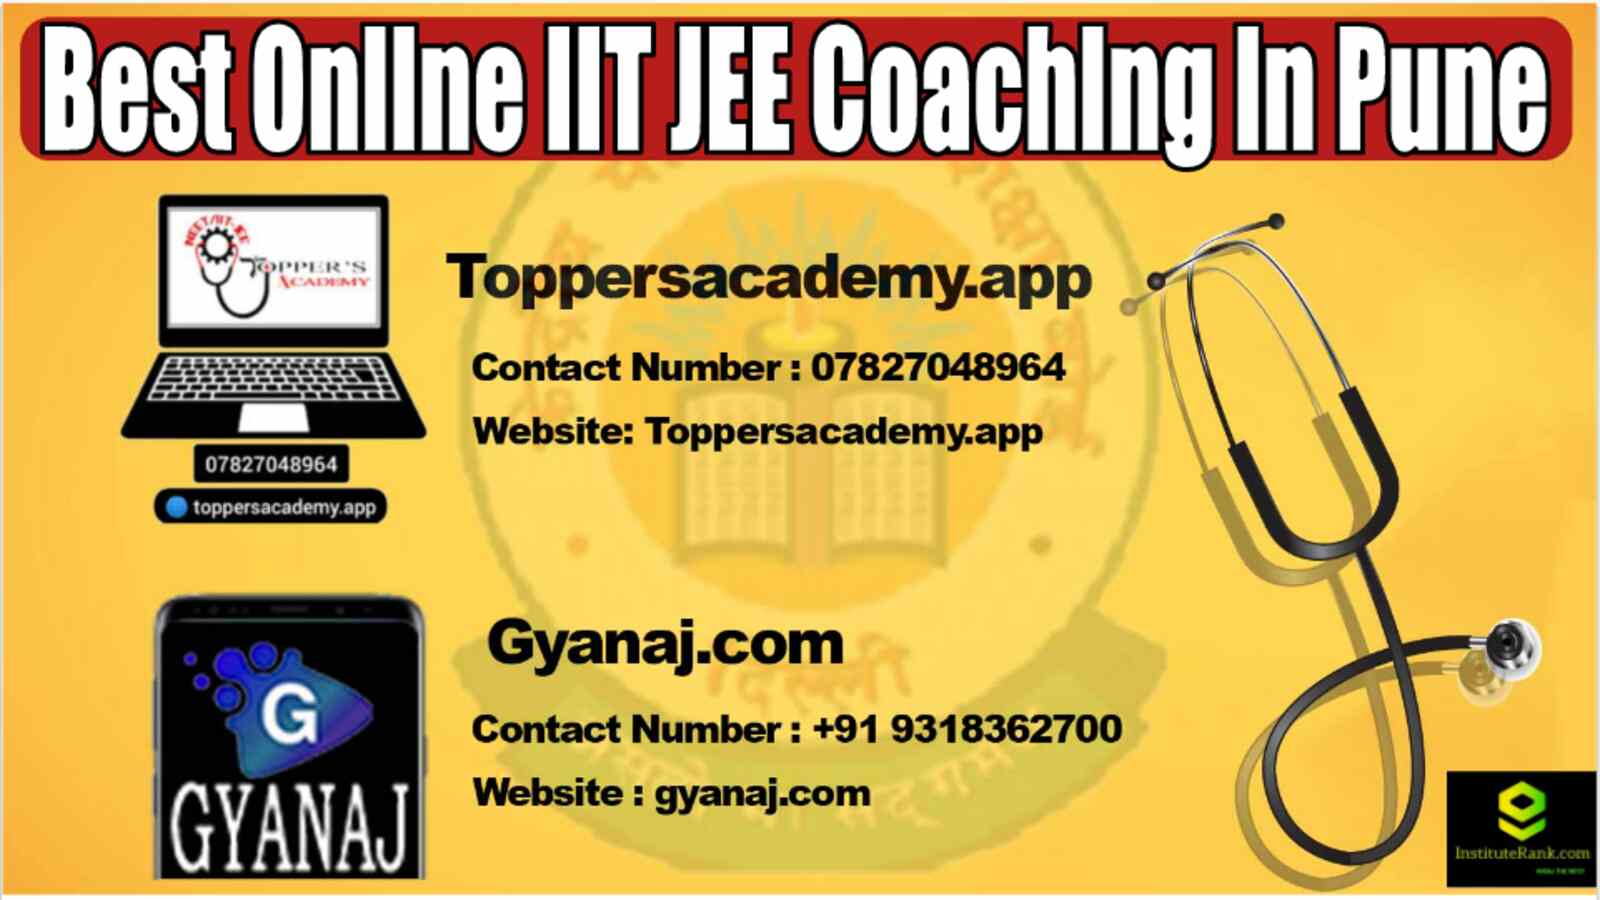 Best Online IIT JEE Coaching in Pune 2022